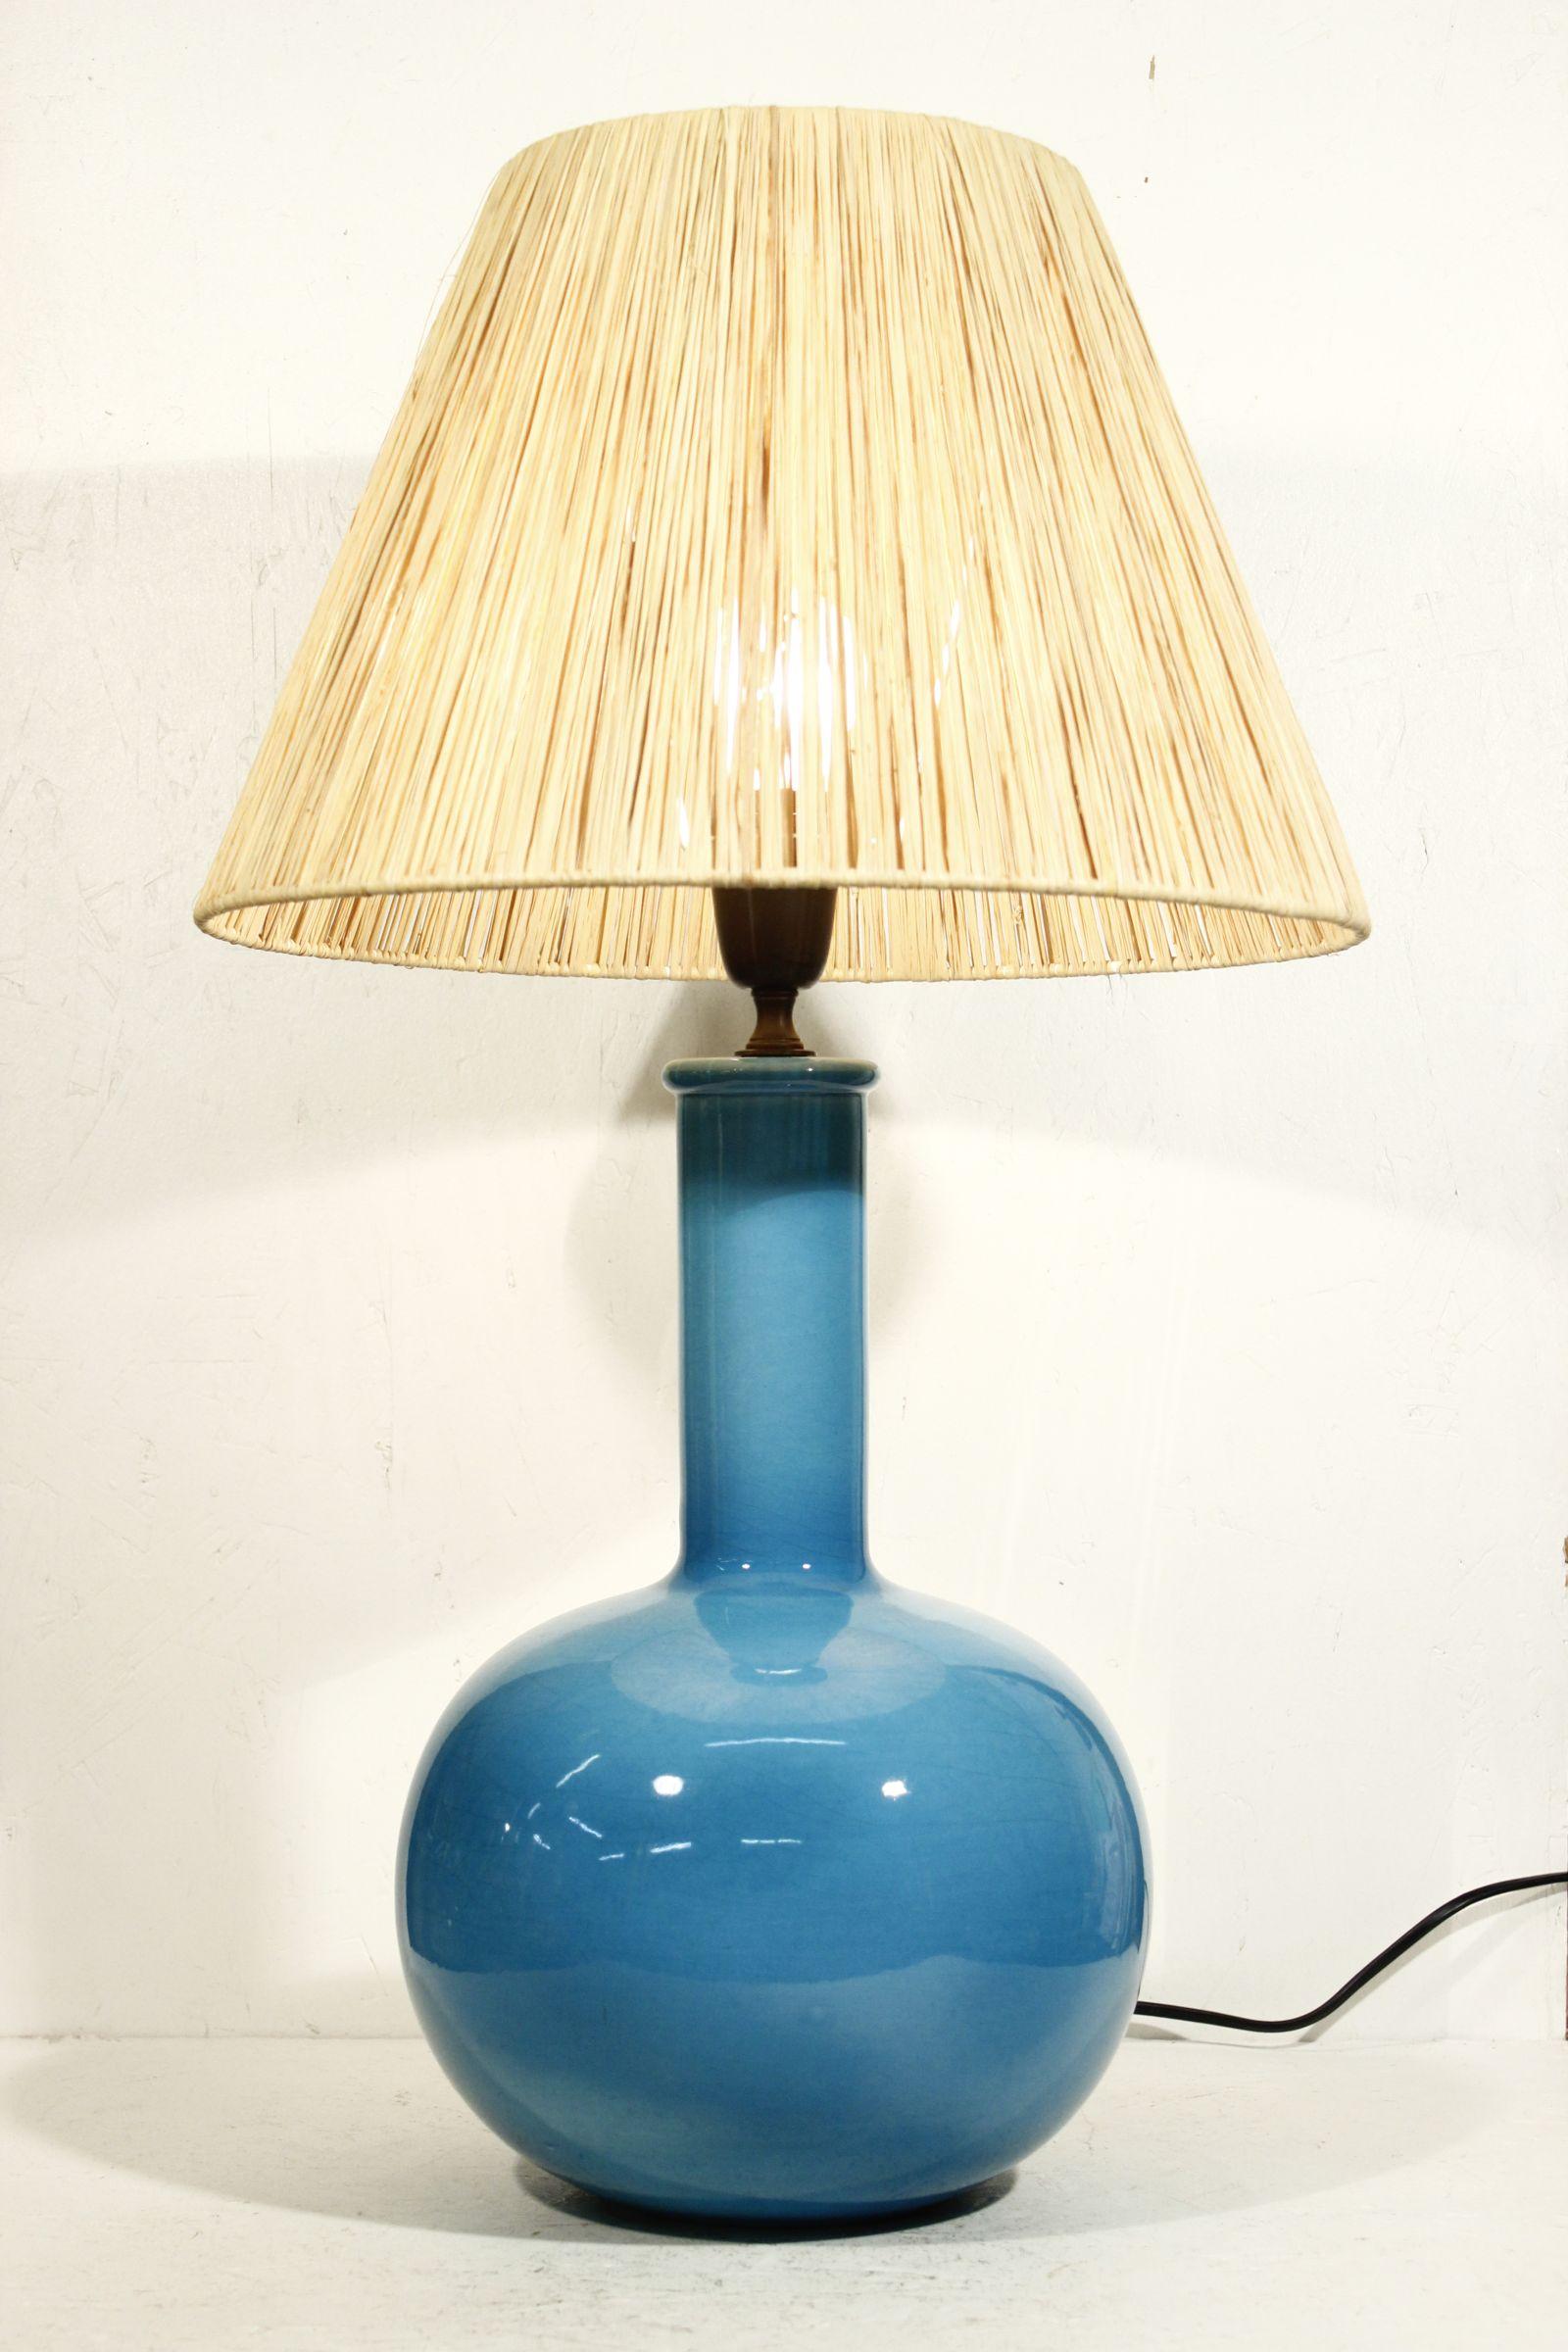 Cerulean blue crackle glaze ceramic lamp base by Alvino Bagni, Italy 1960s For Sale 3